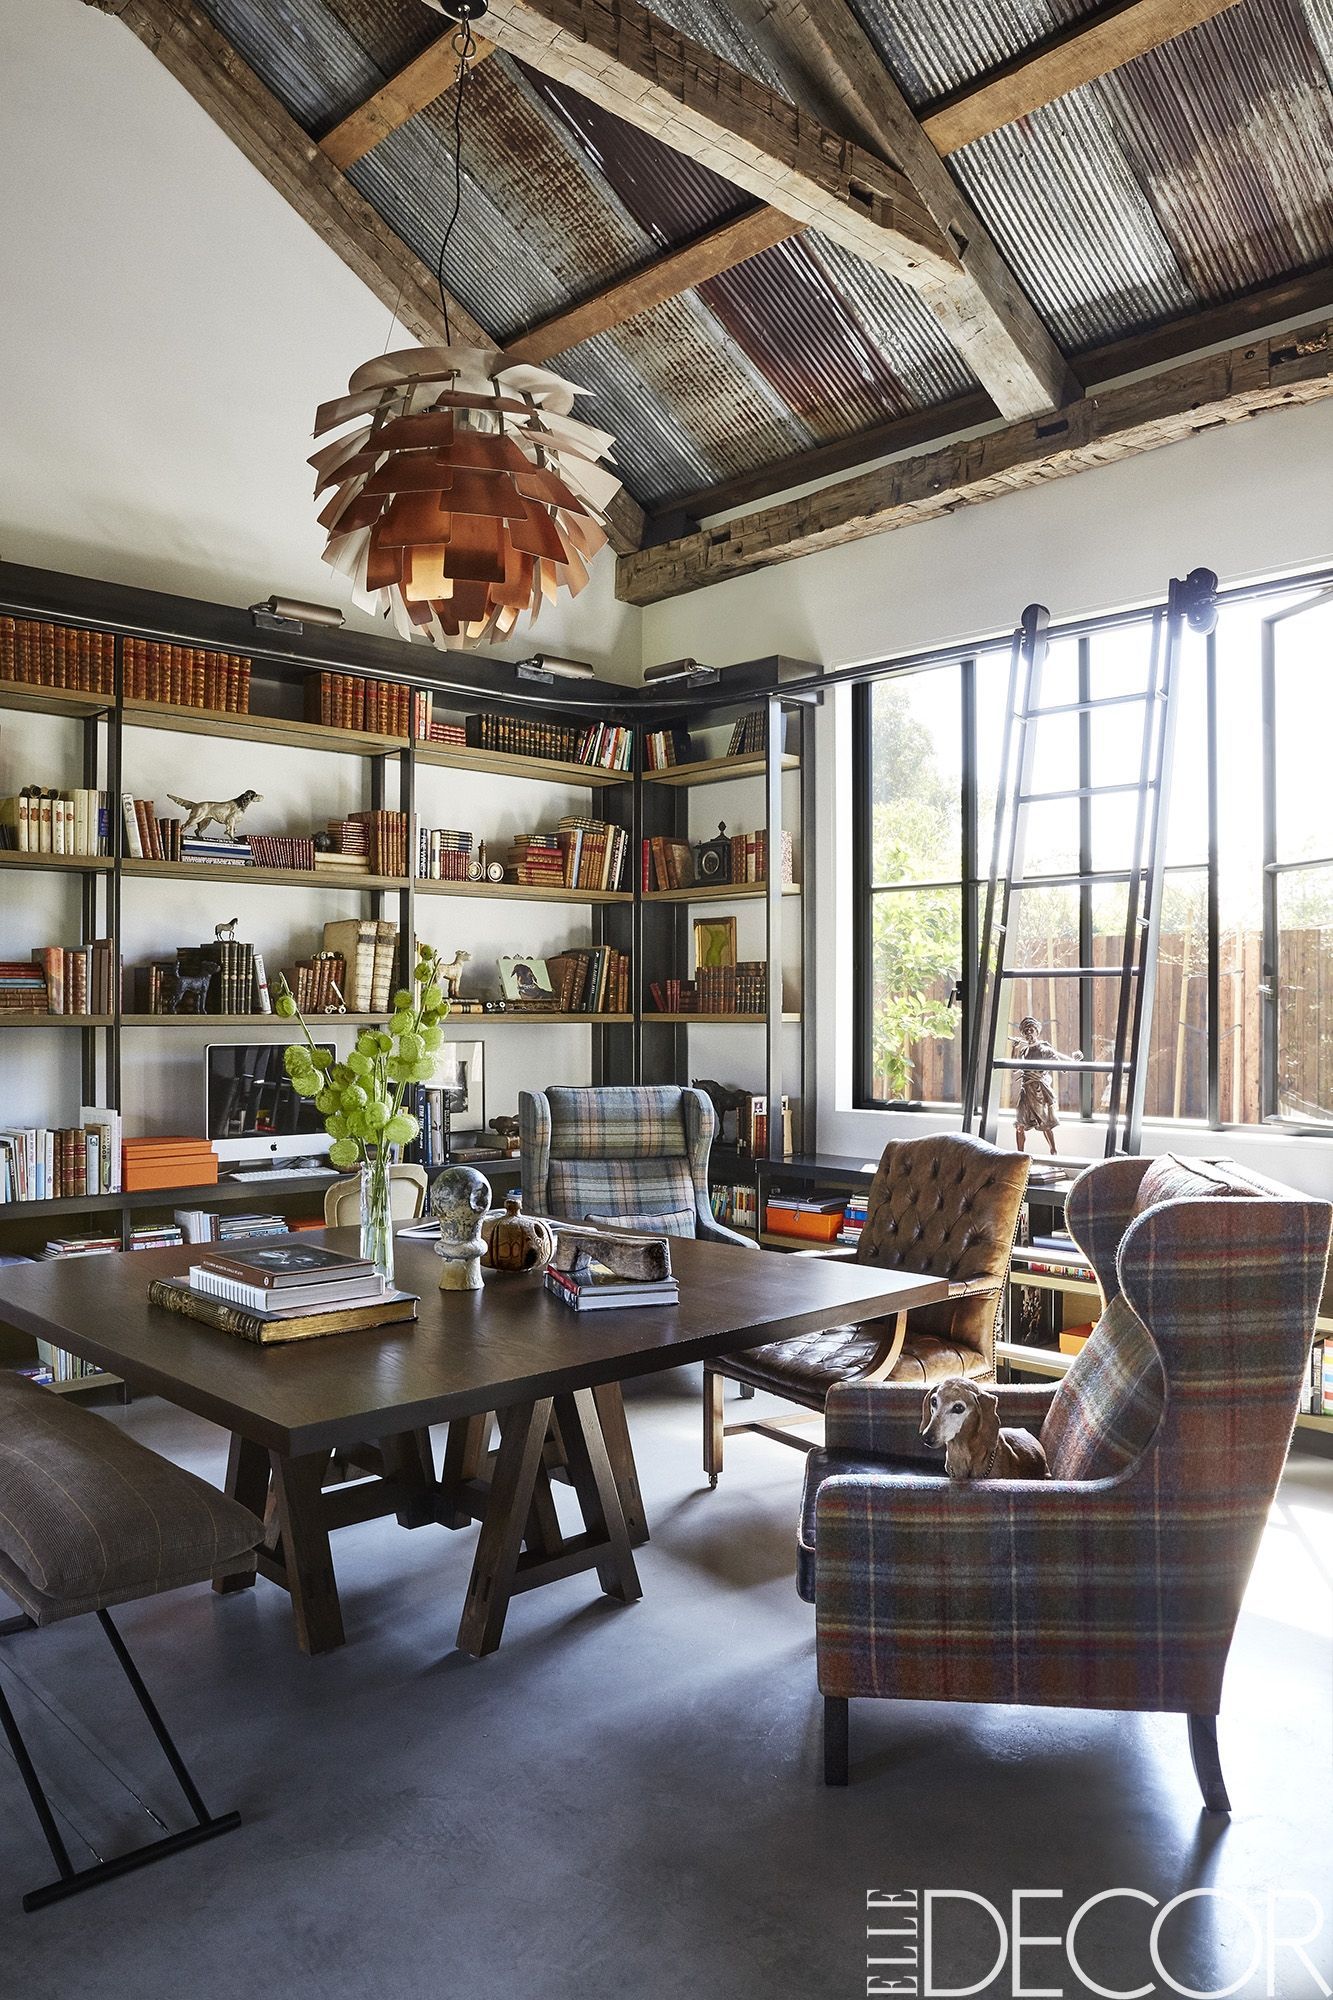 15 Inspiring Modern Farmhouse Designs - Modern Farmhouse Room Photos